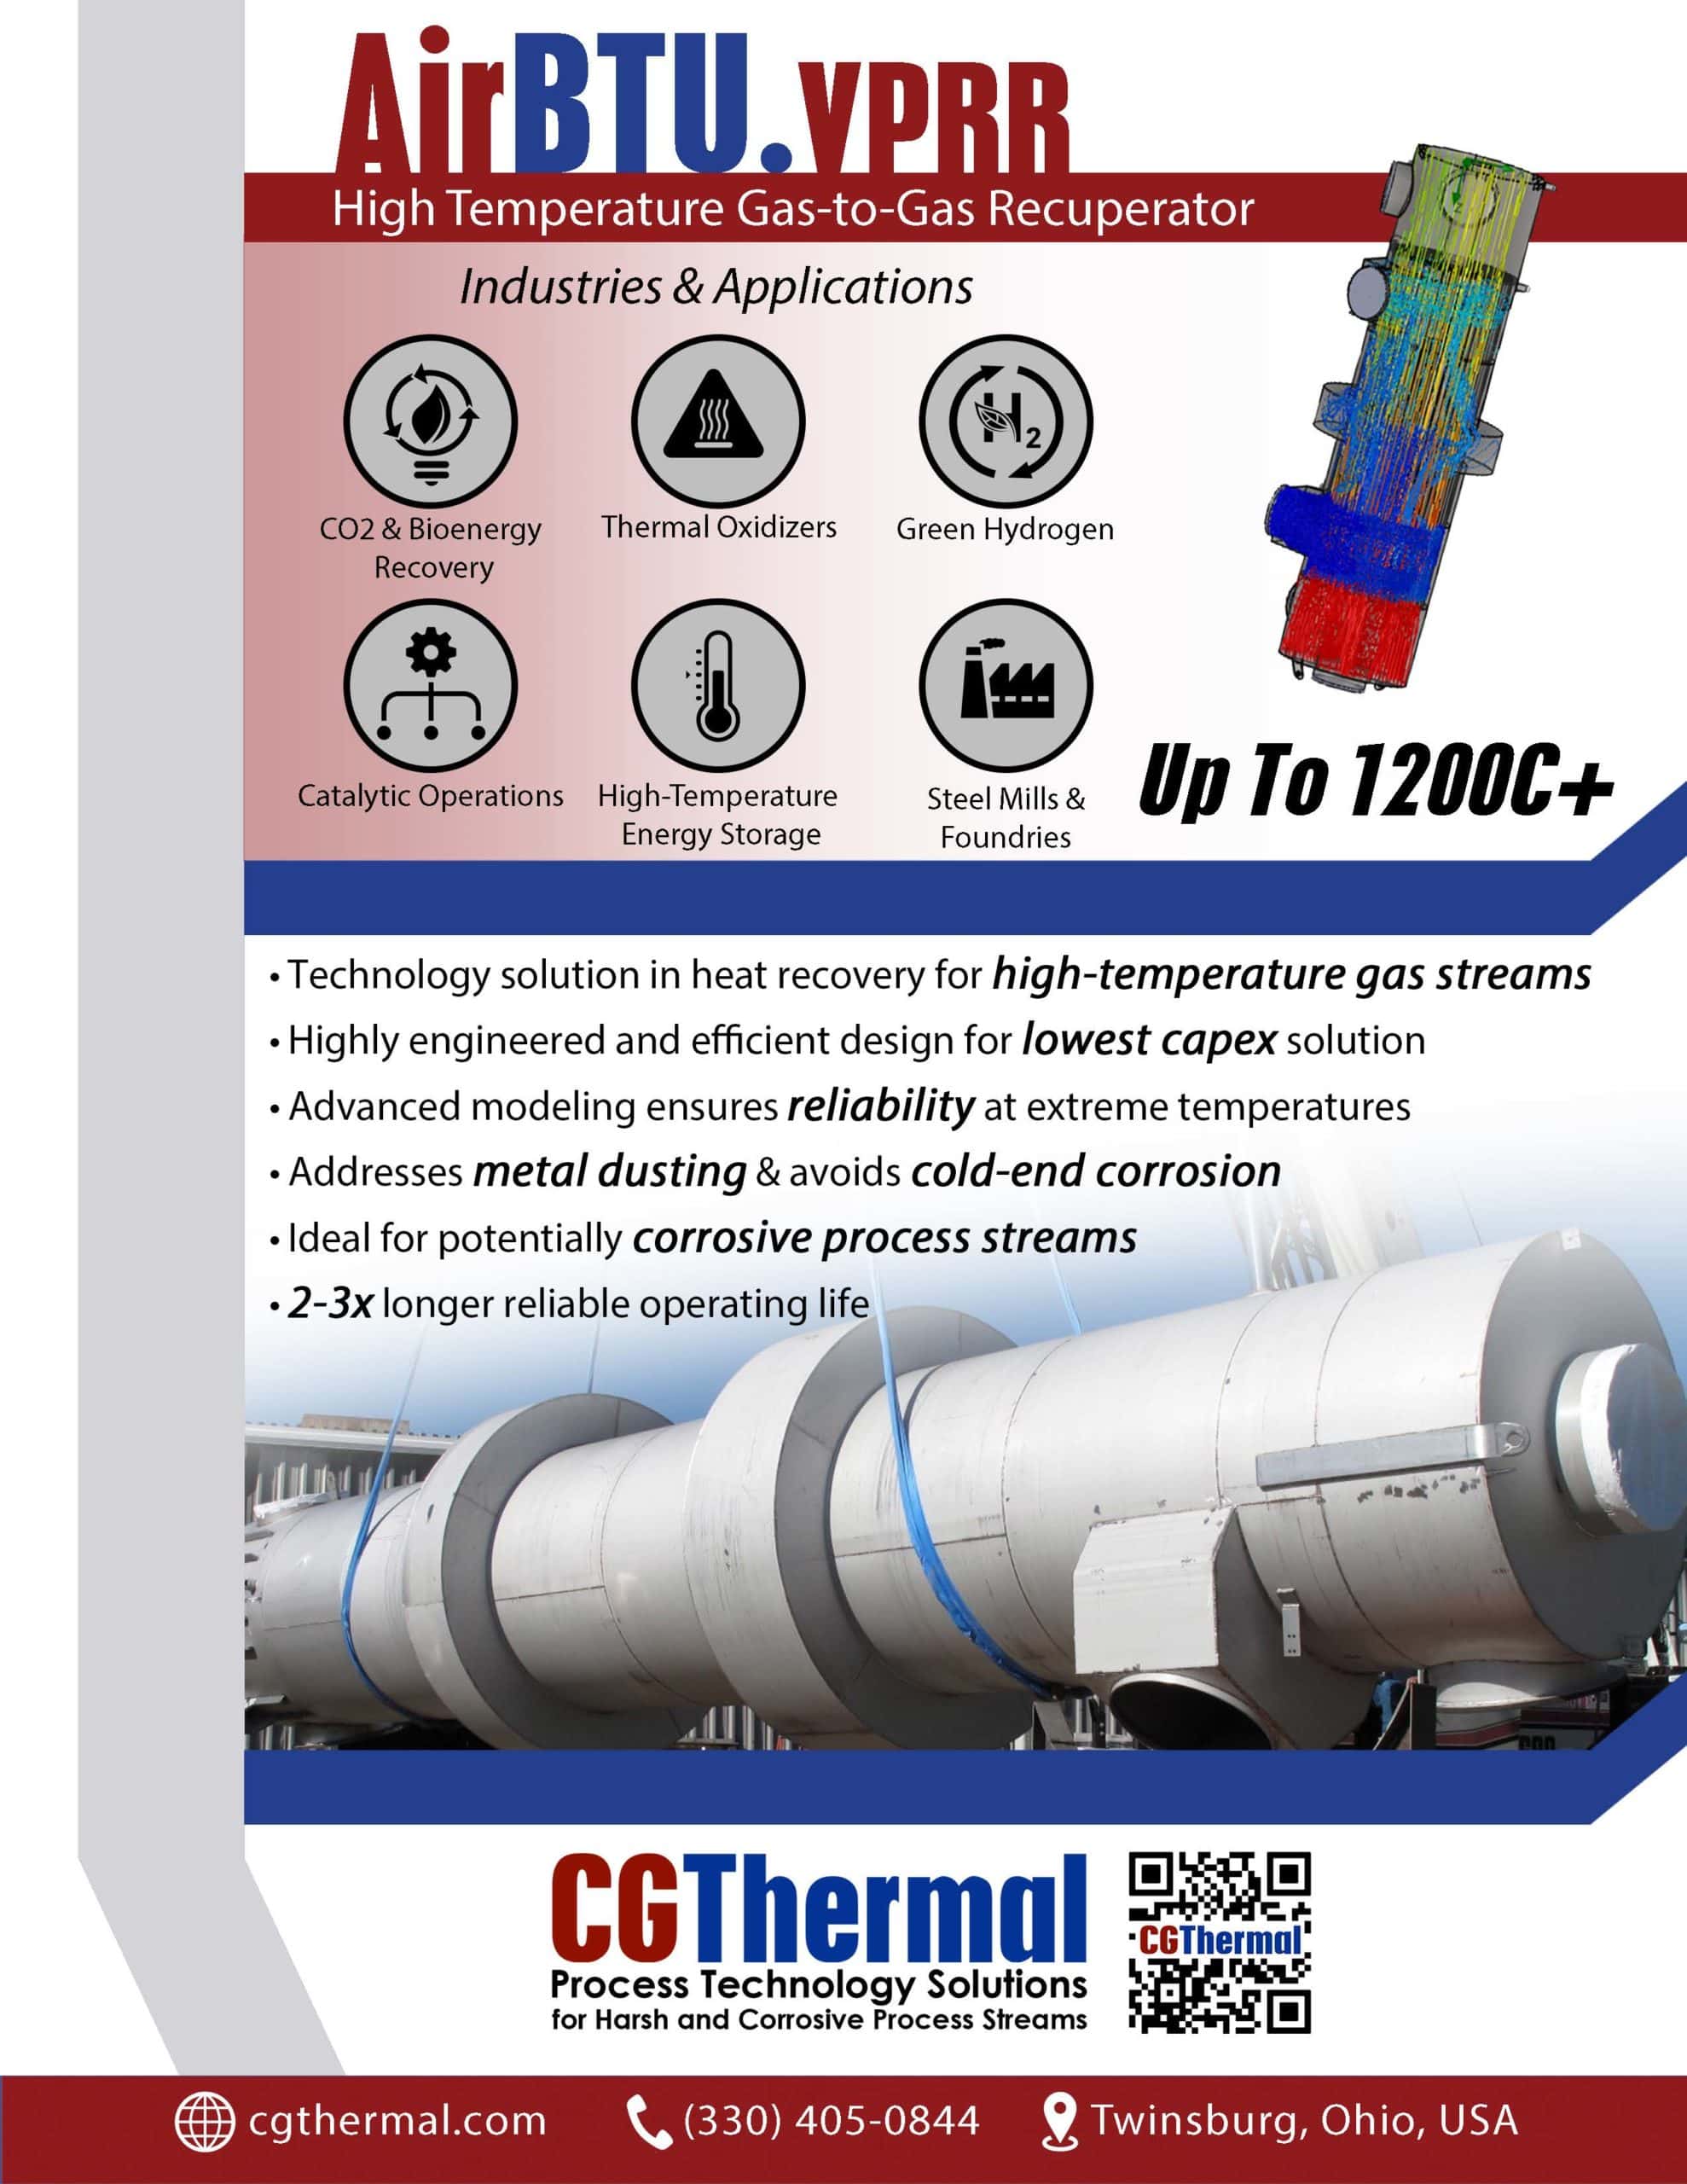 AirBTU VPRR High-Temperature Recuperator - CG Thermal